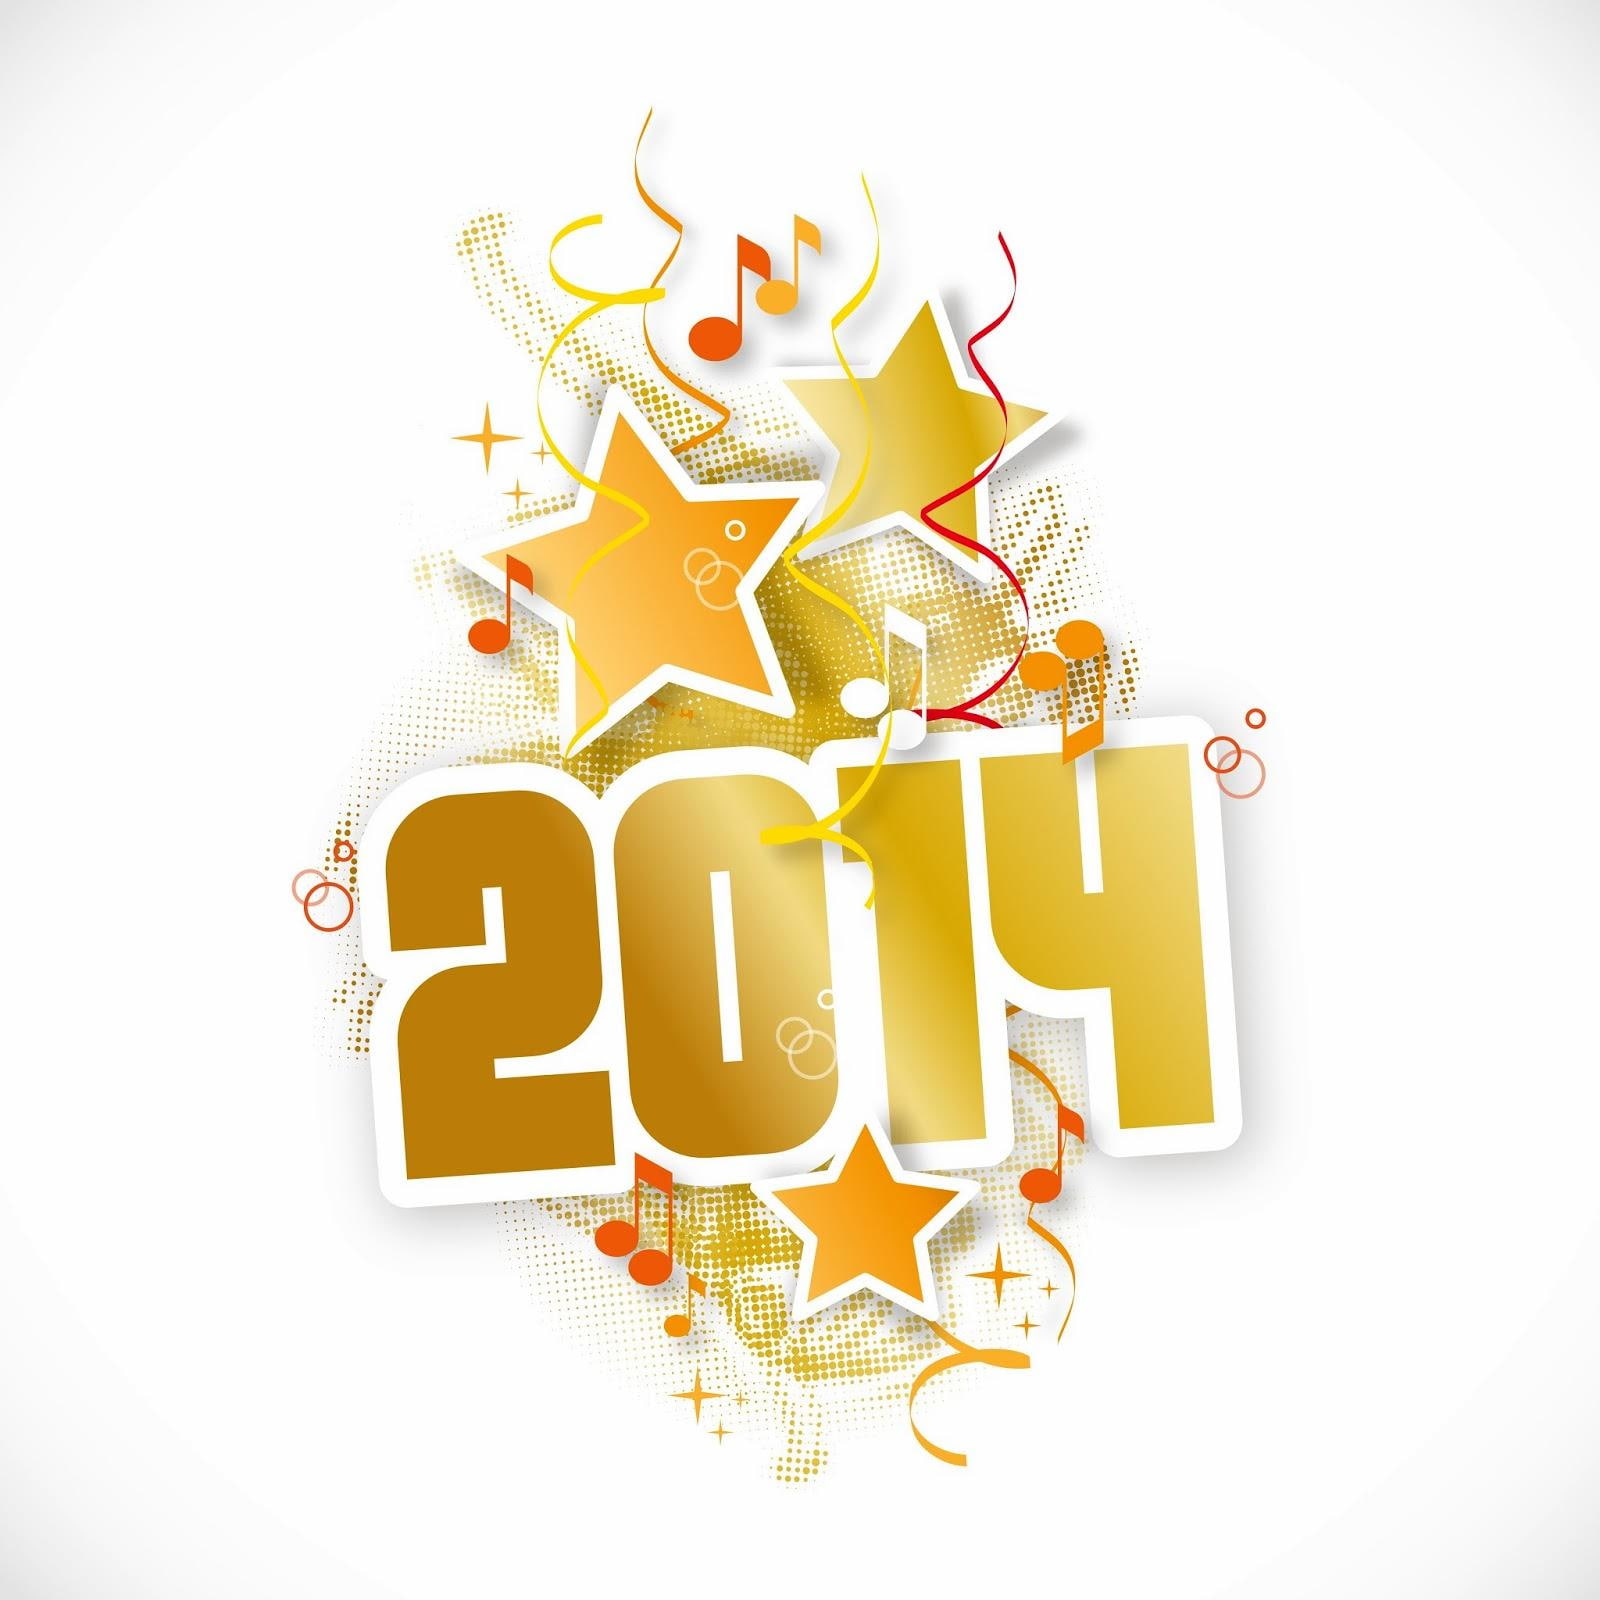 Music New Year 2014, yellow and orange 2014 print illustration